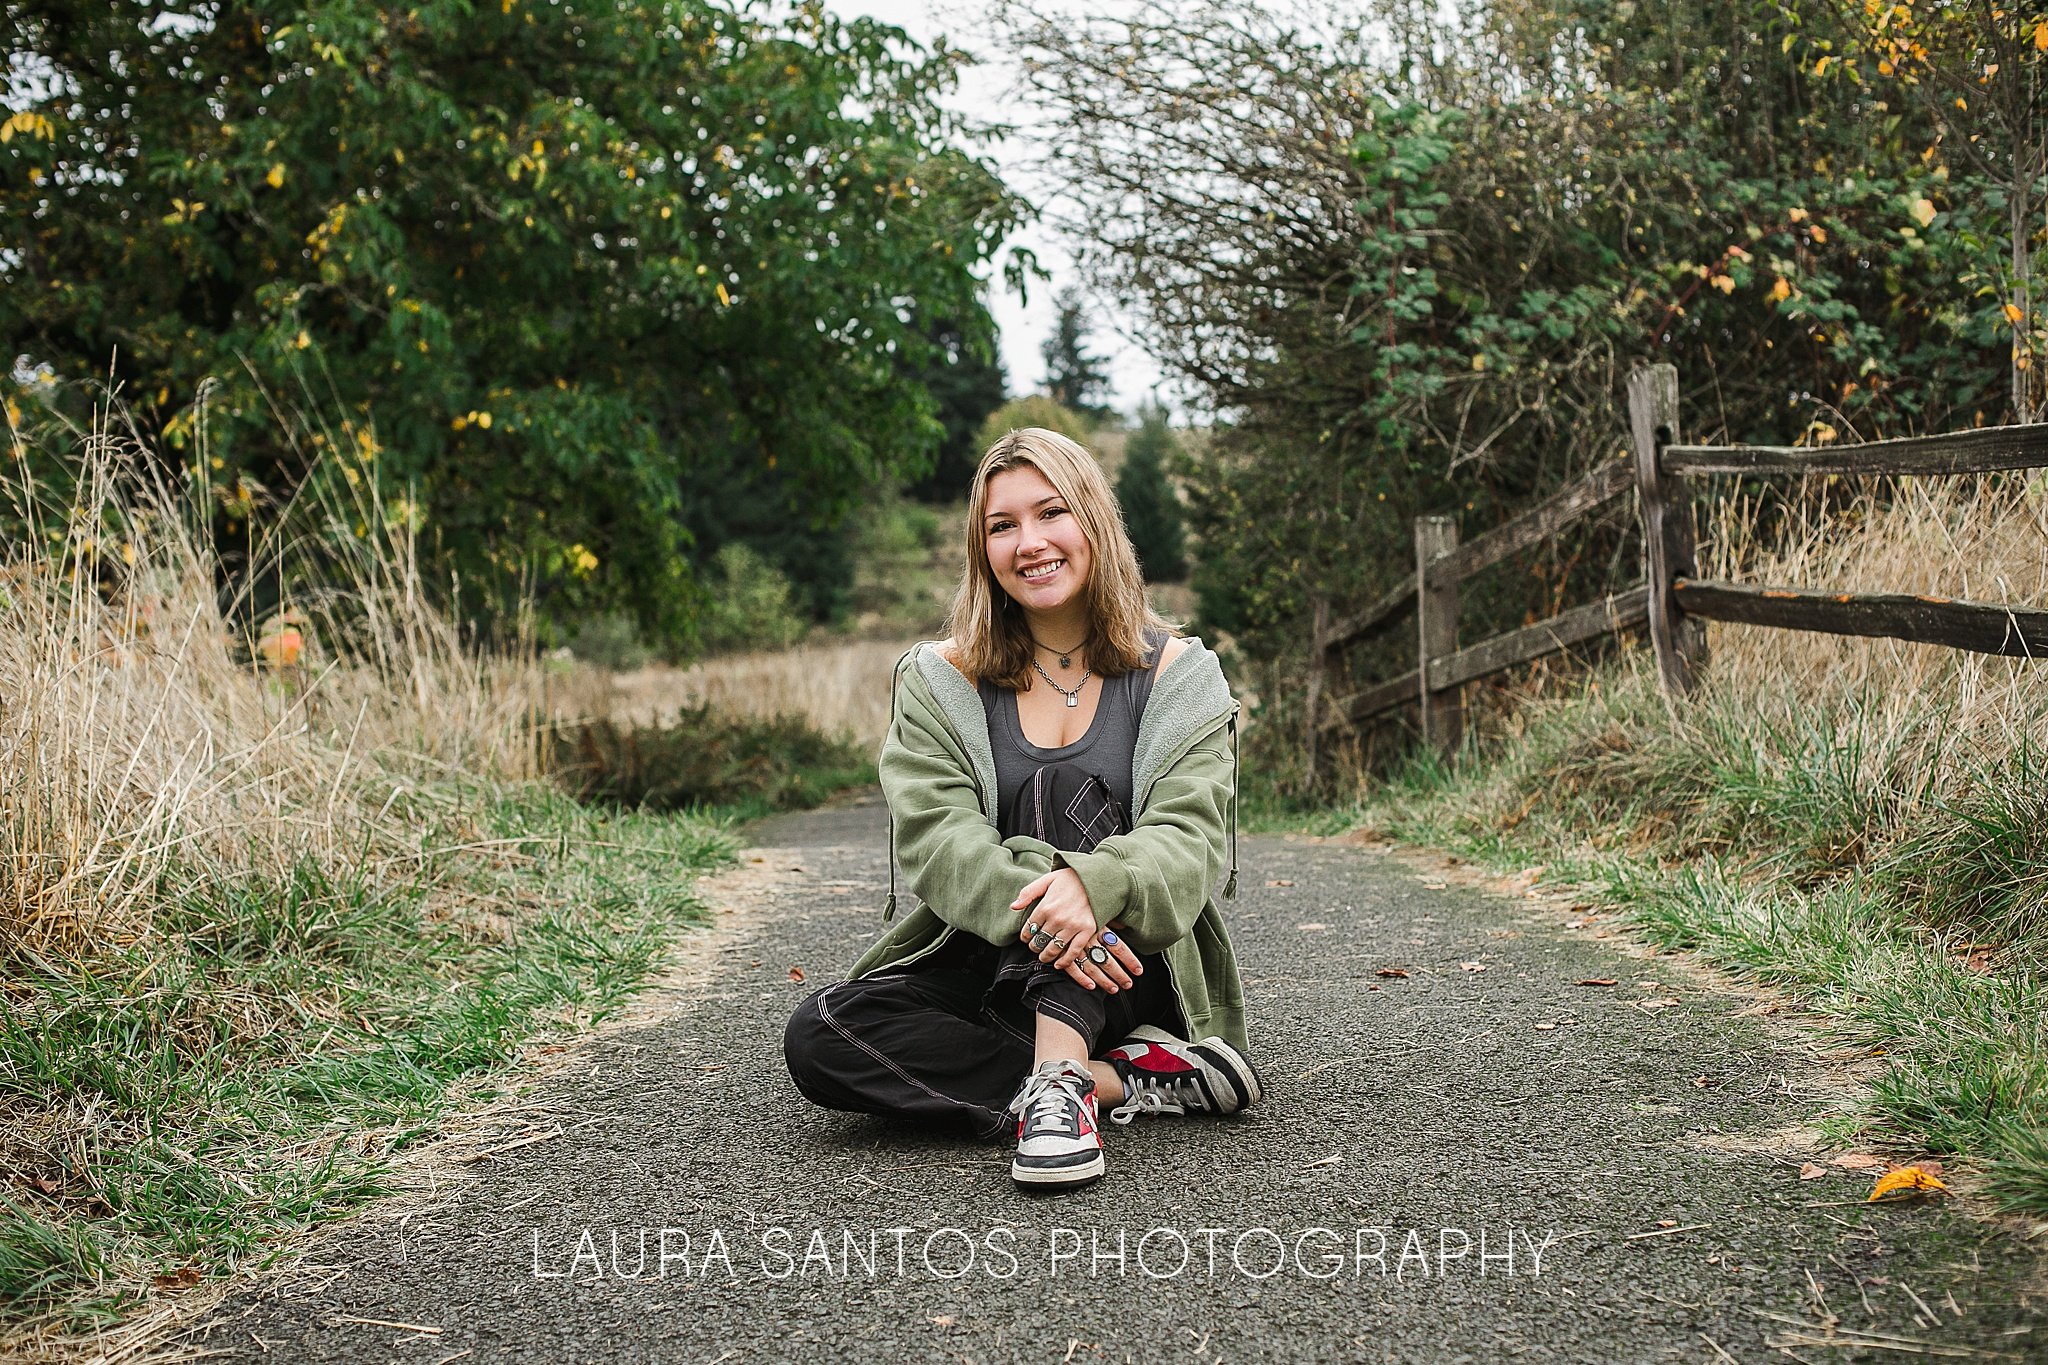 Laura Santos Photography Portland Oregon Family Photographer_4025.jpg